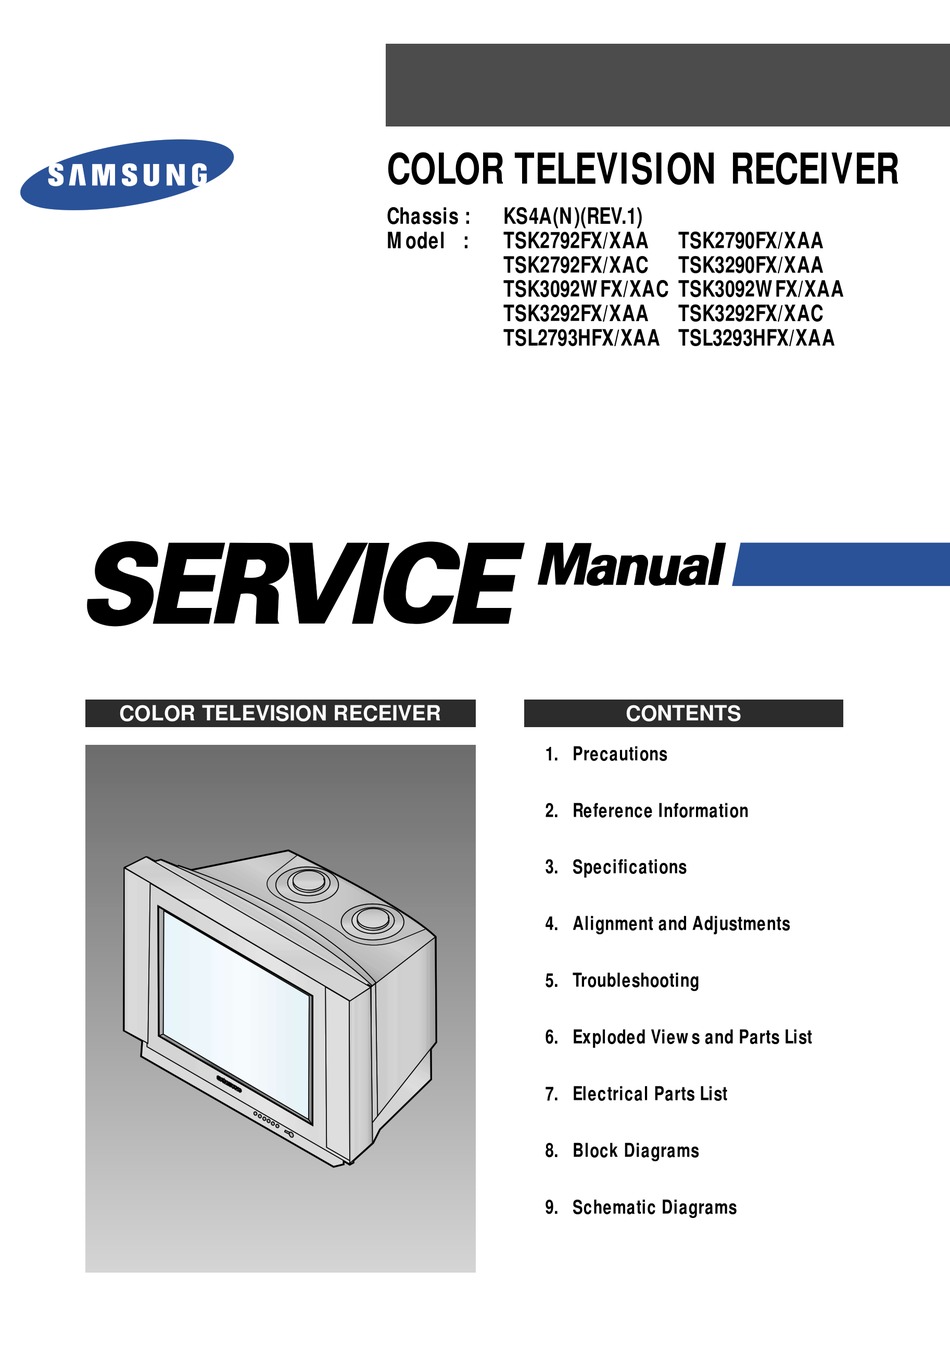 SAMSUNG TSK2792FX/XAA SERVICE MANUAL Pdf Download | ManualsLib